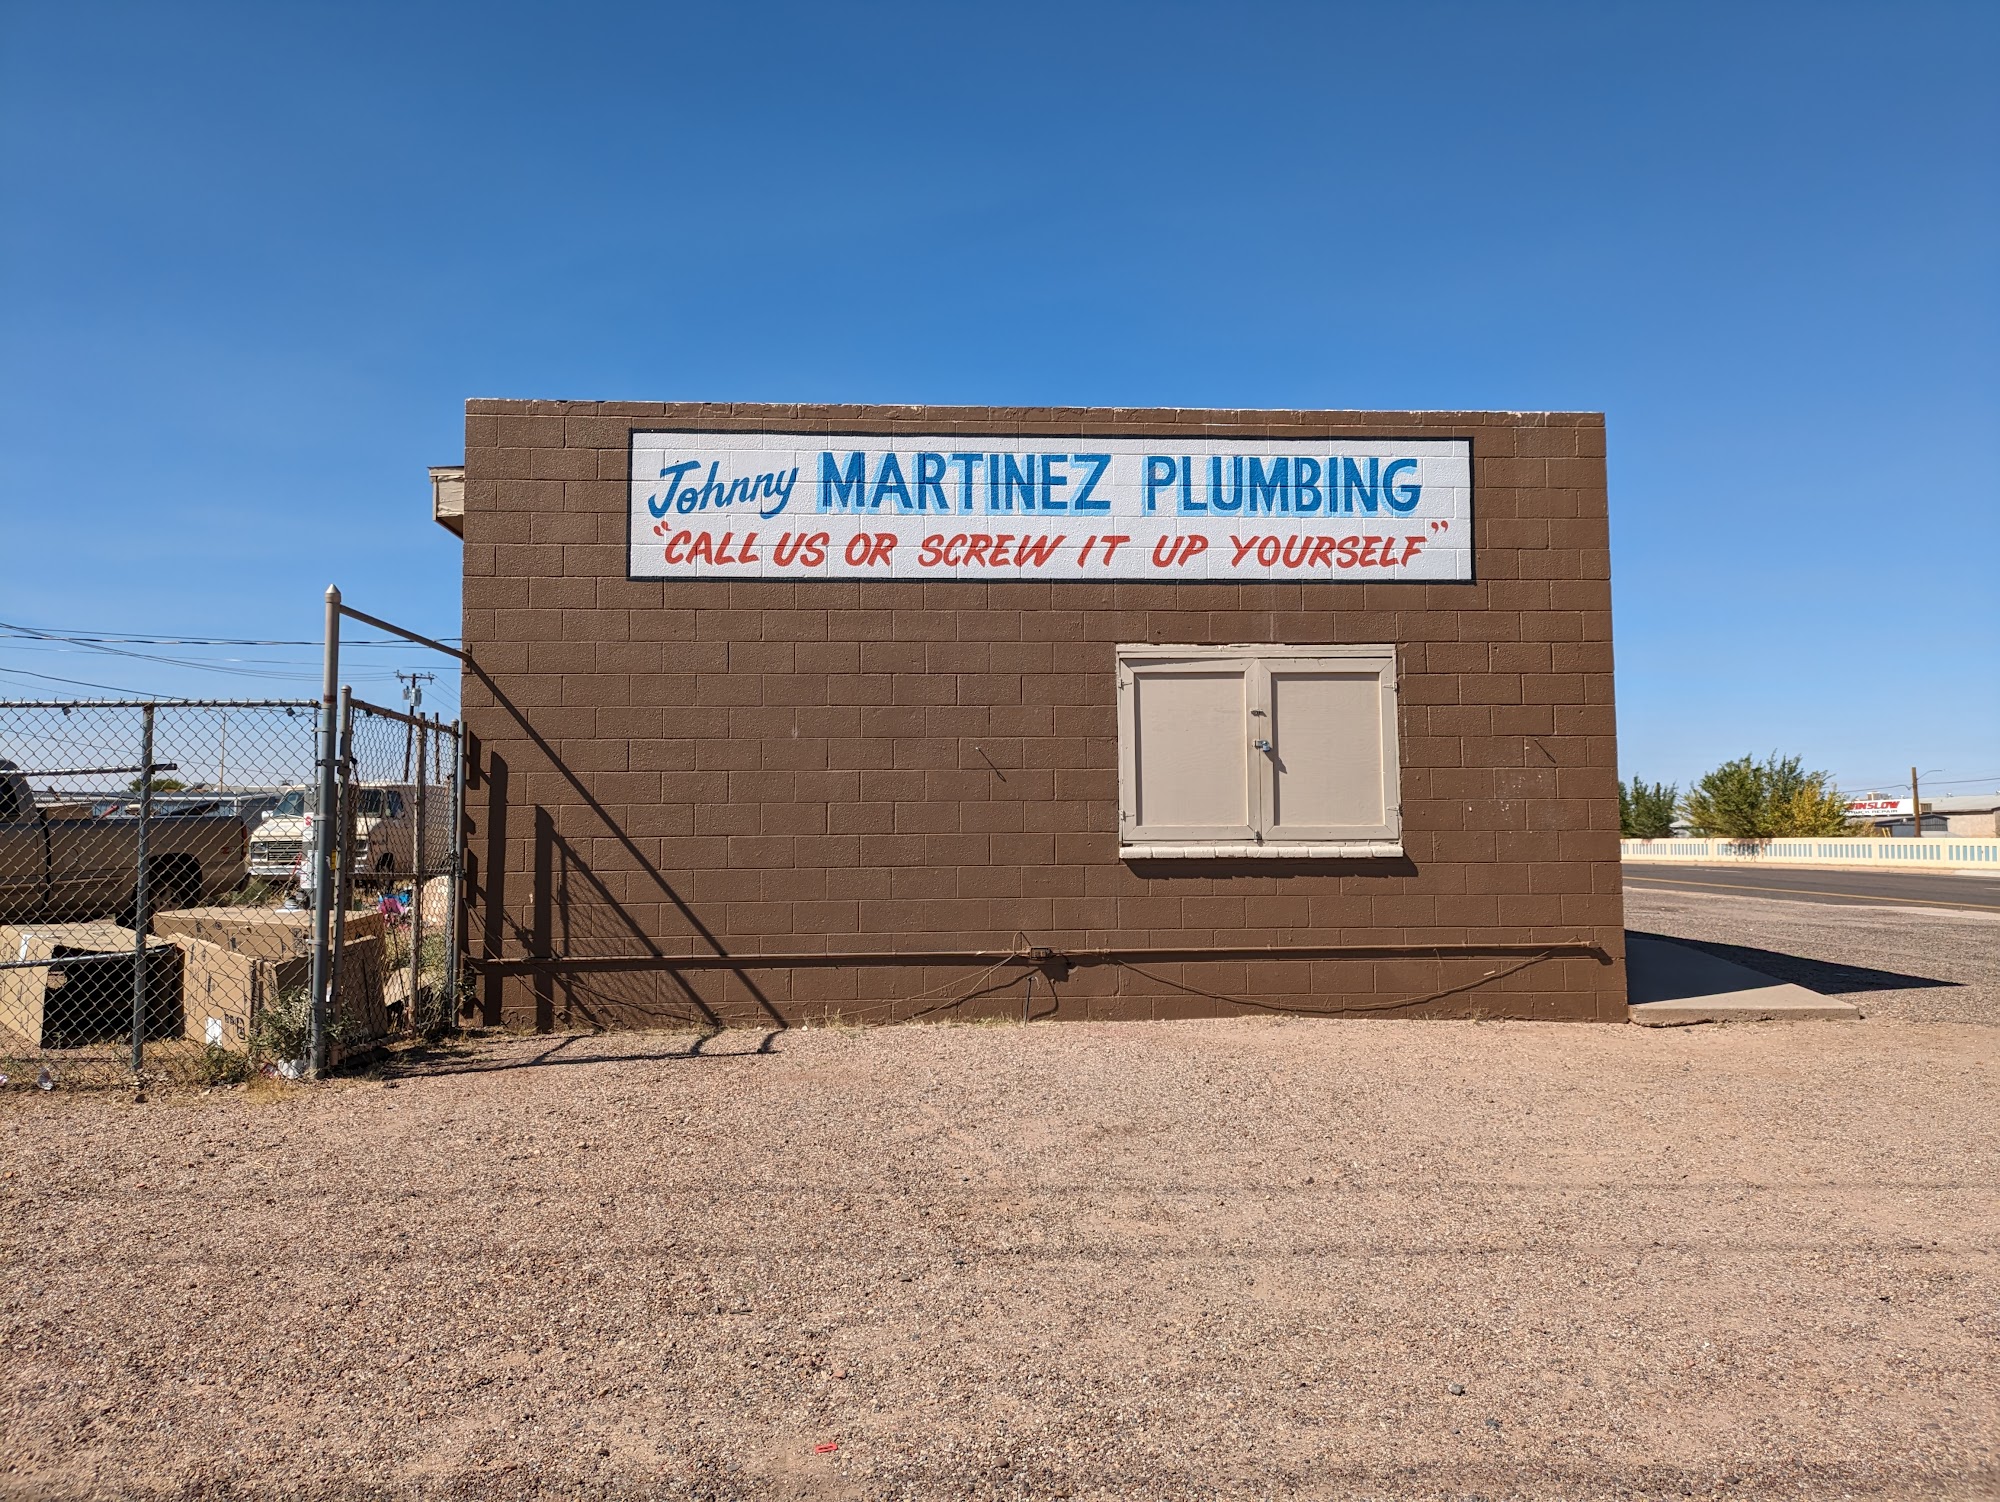 Johnny Martinez Plumbing 813 E 3rd St, Winslow Arizona 86047